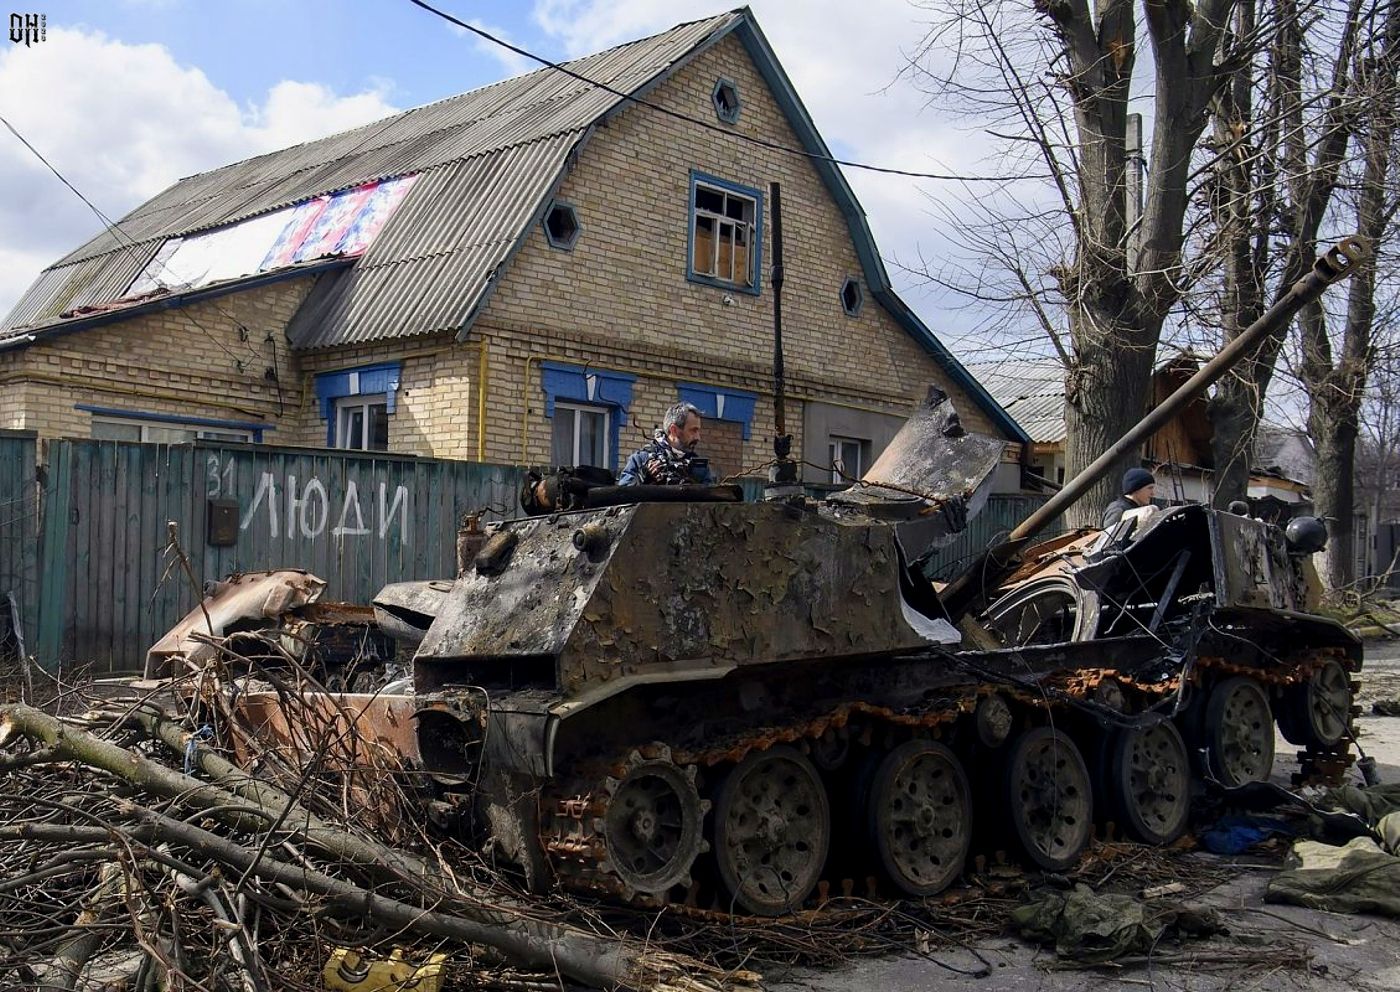 DH - Bucha destruction and massacre under Russian occupation 11 - Feb-Apr 2022 - Bucha Ukraine.jpg